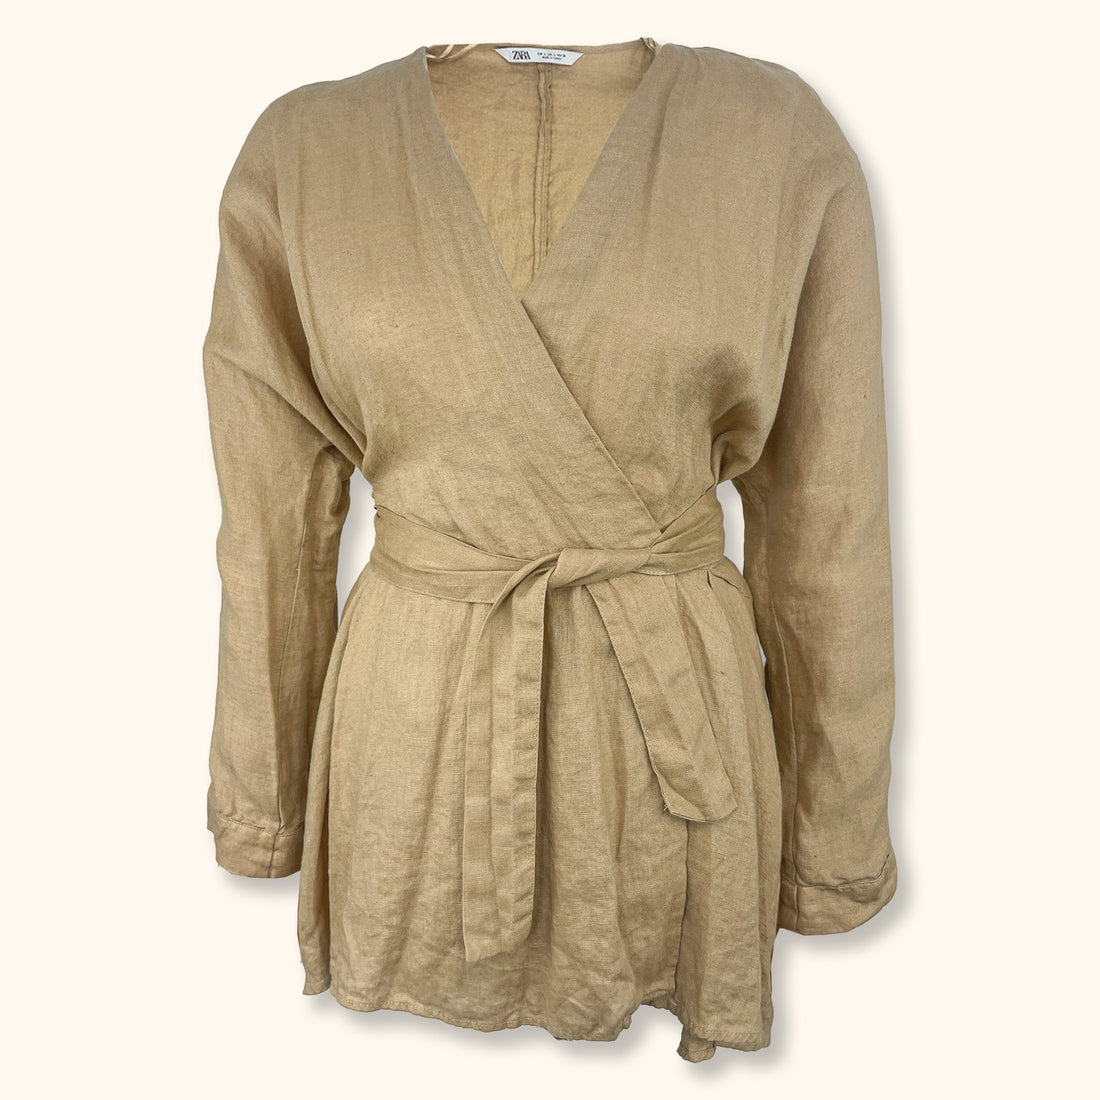 Zara Beige Linen Wrap Front Blouse - Size Large - Zara - Tops &amp; Shirts